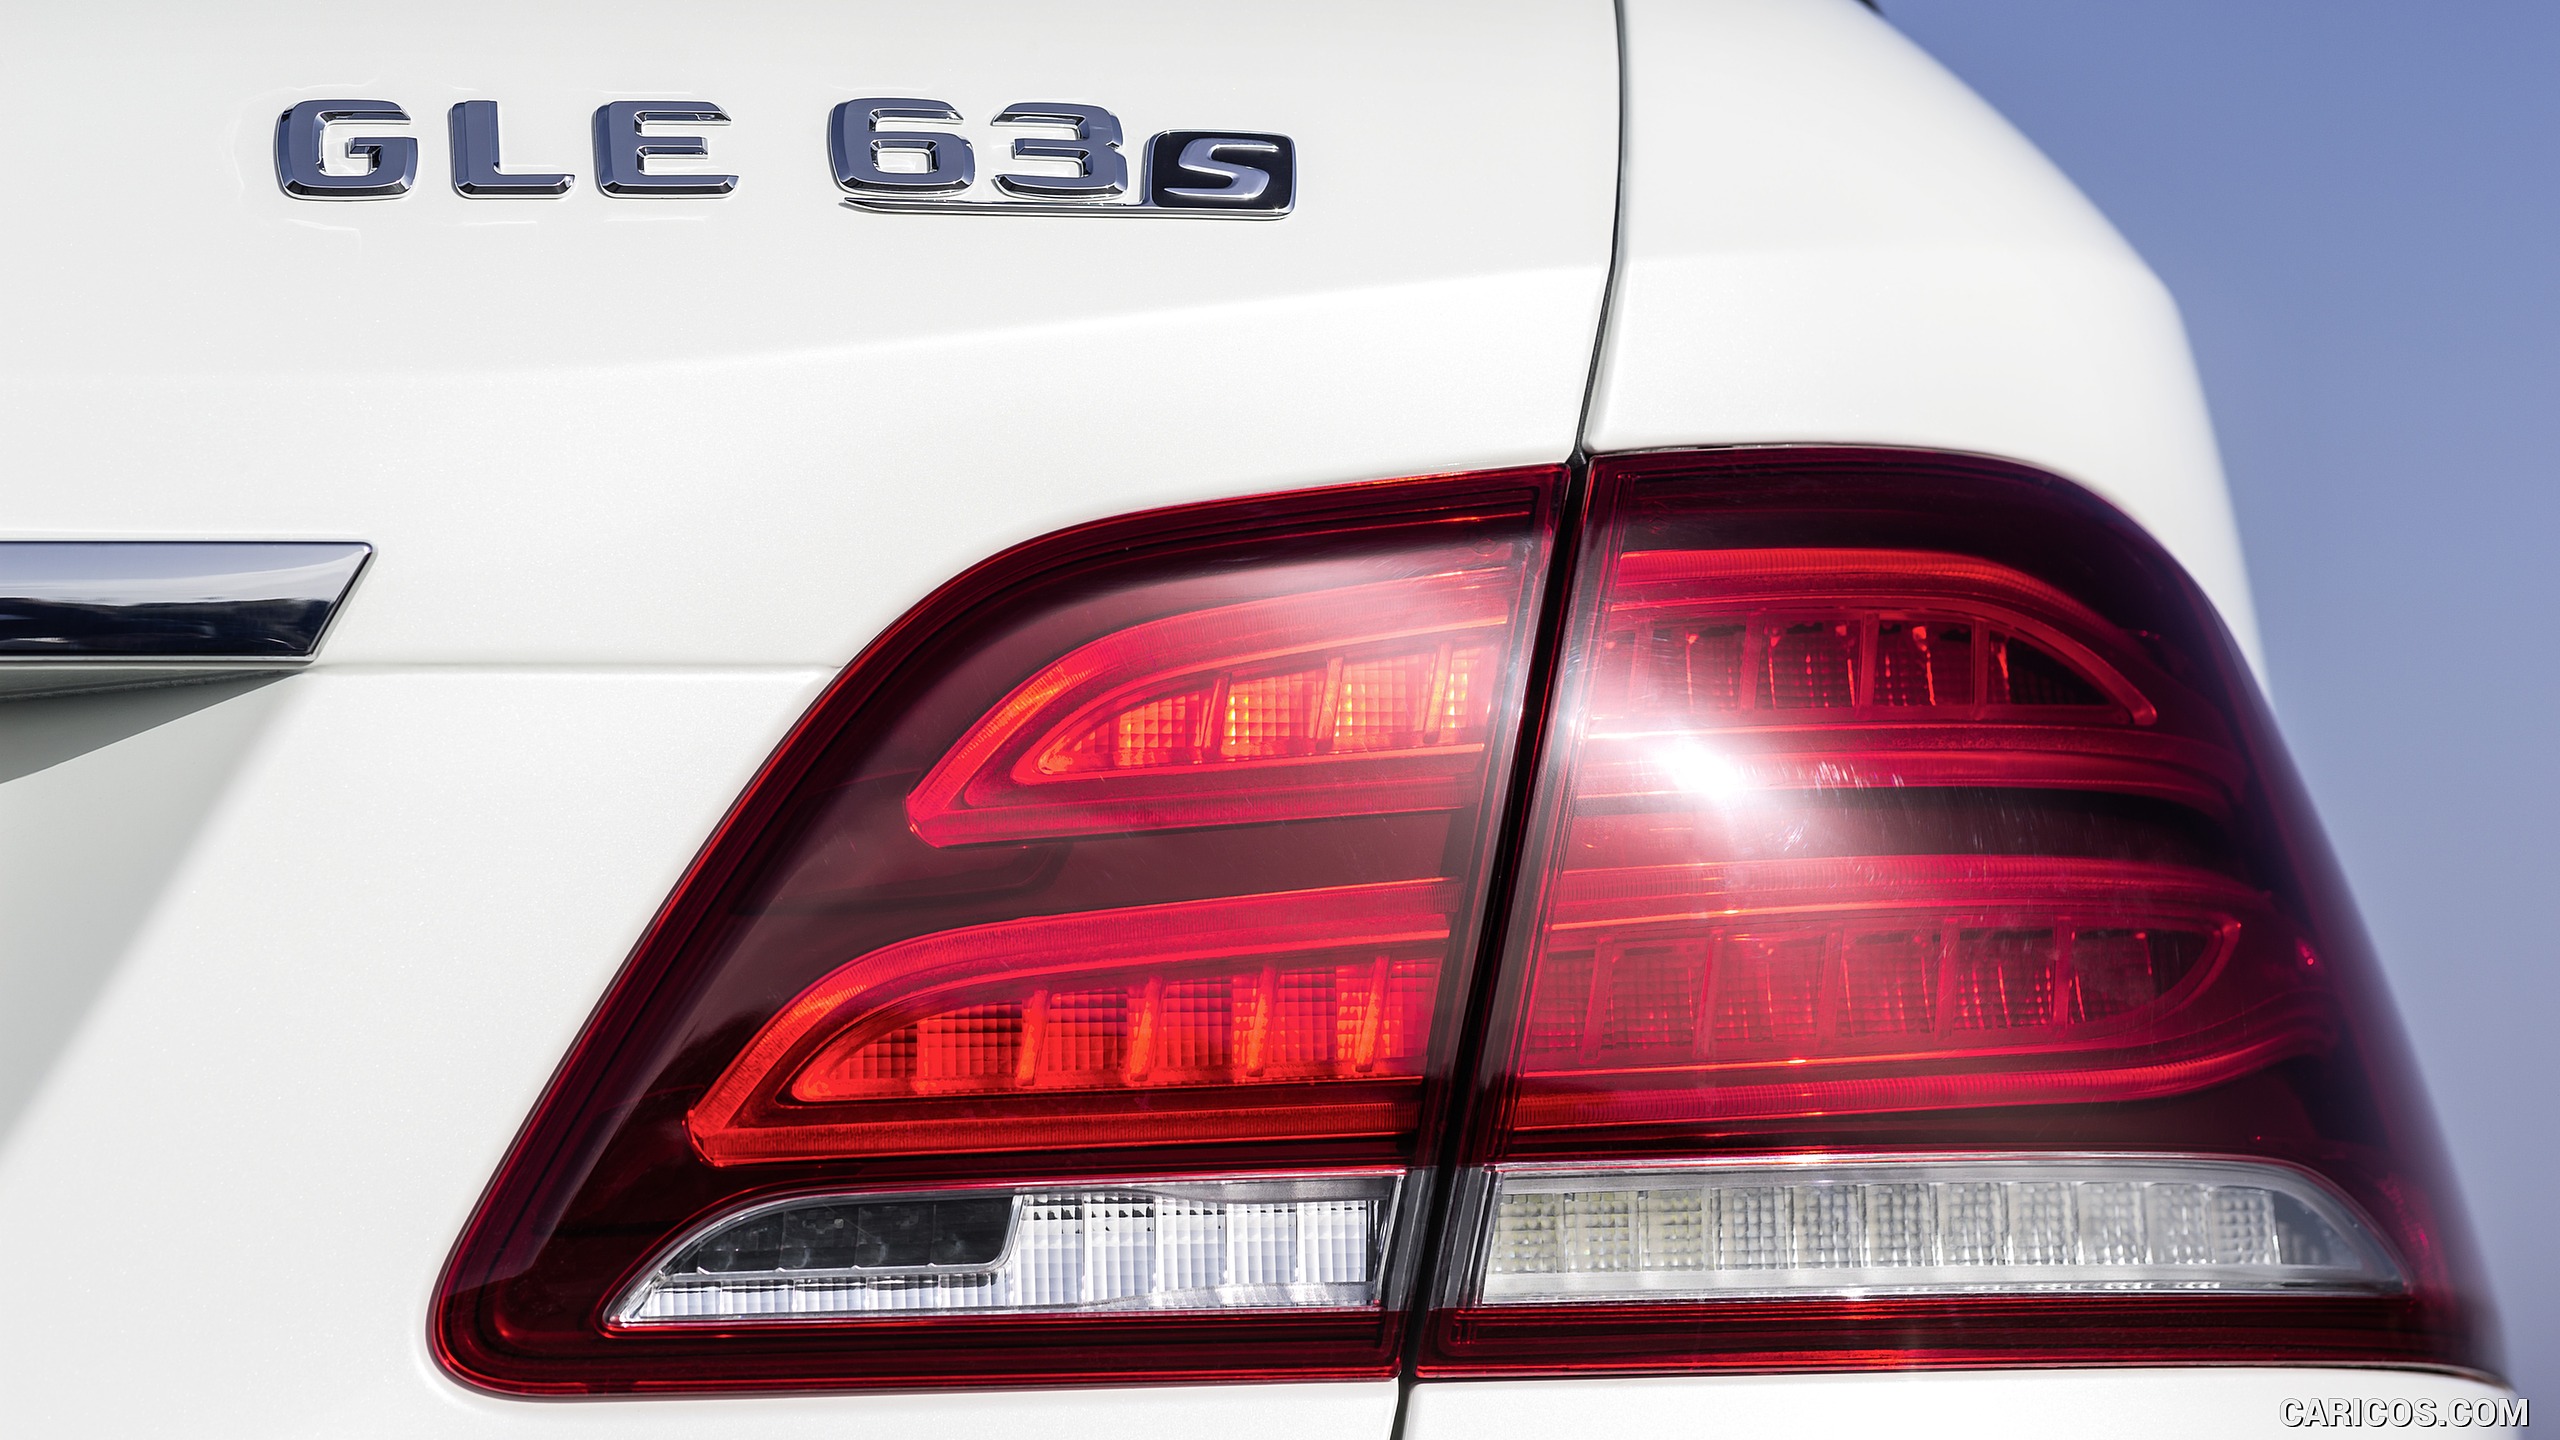 2016 Mercedes-AMG GLE 63 S (Designo Diamond White Bright)  - Tail Light, #15 of 68